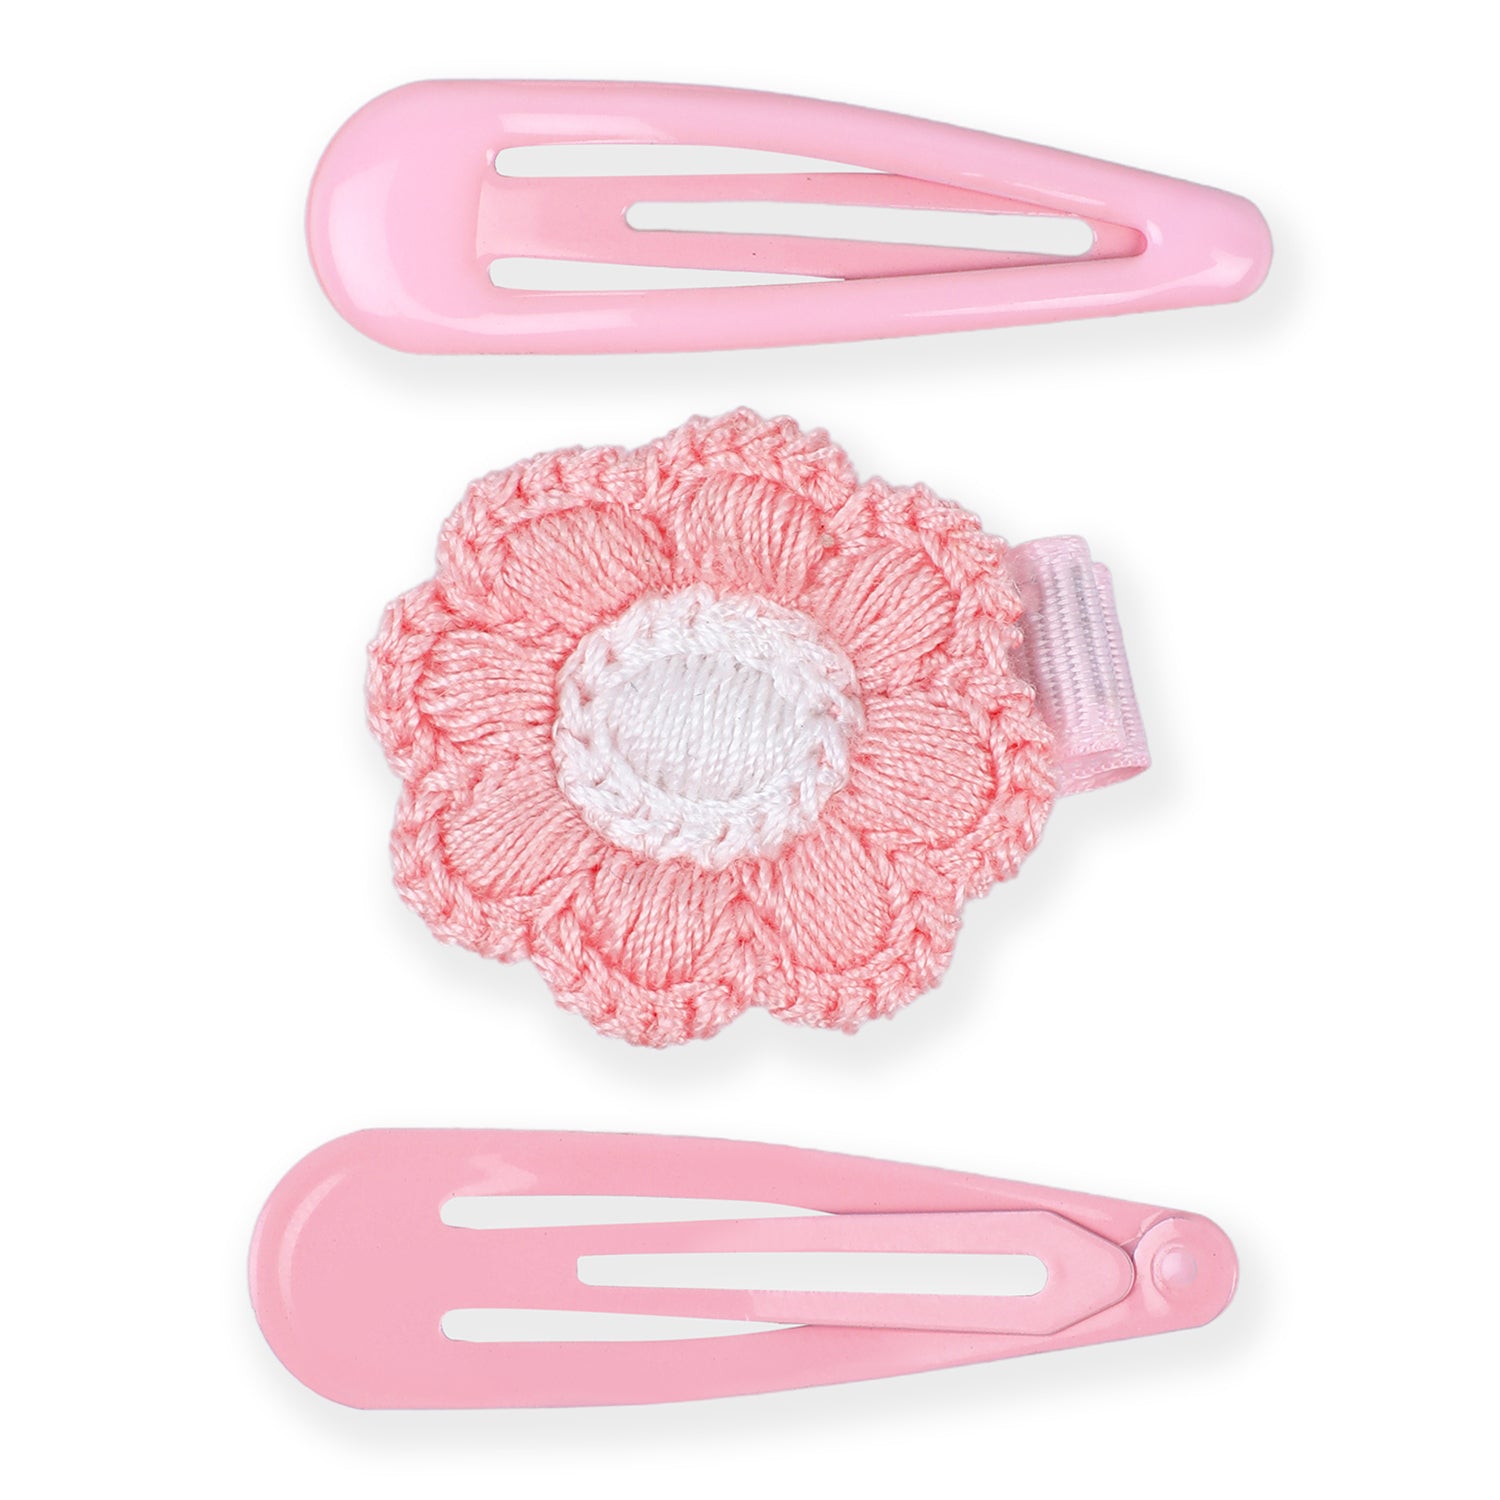 Penelope Floral Hair Clips Set 9 Pcs - Pink - Baby Moo